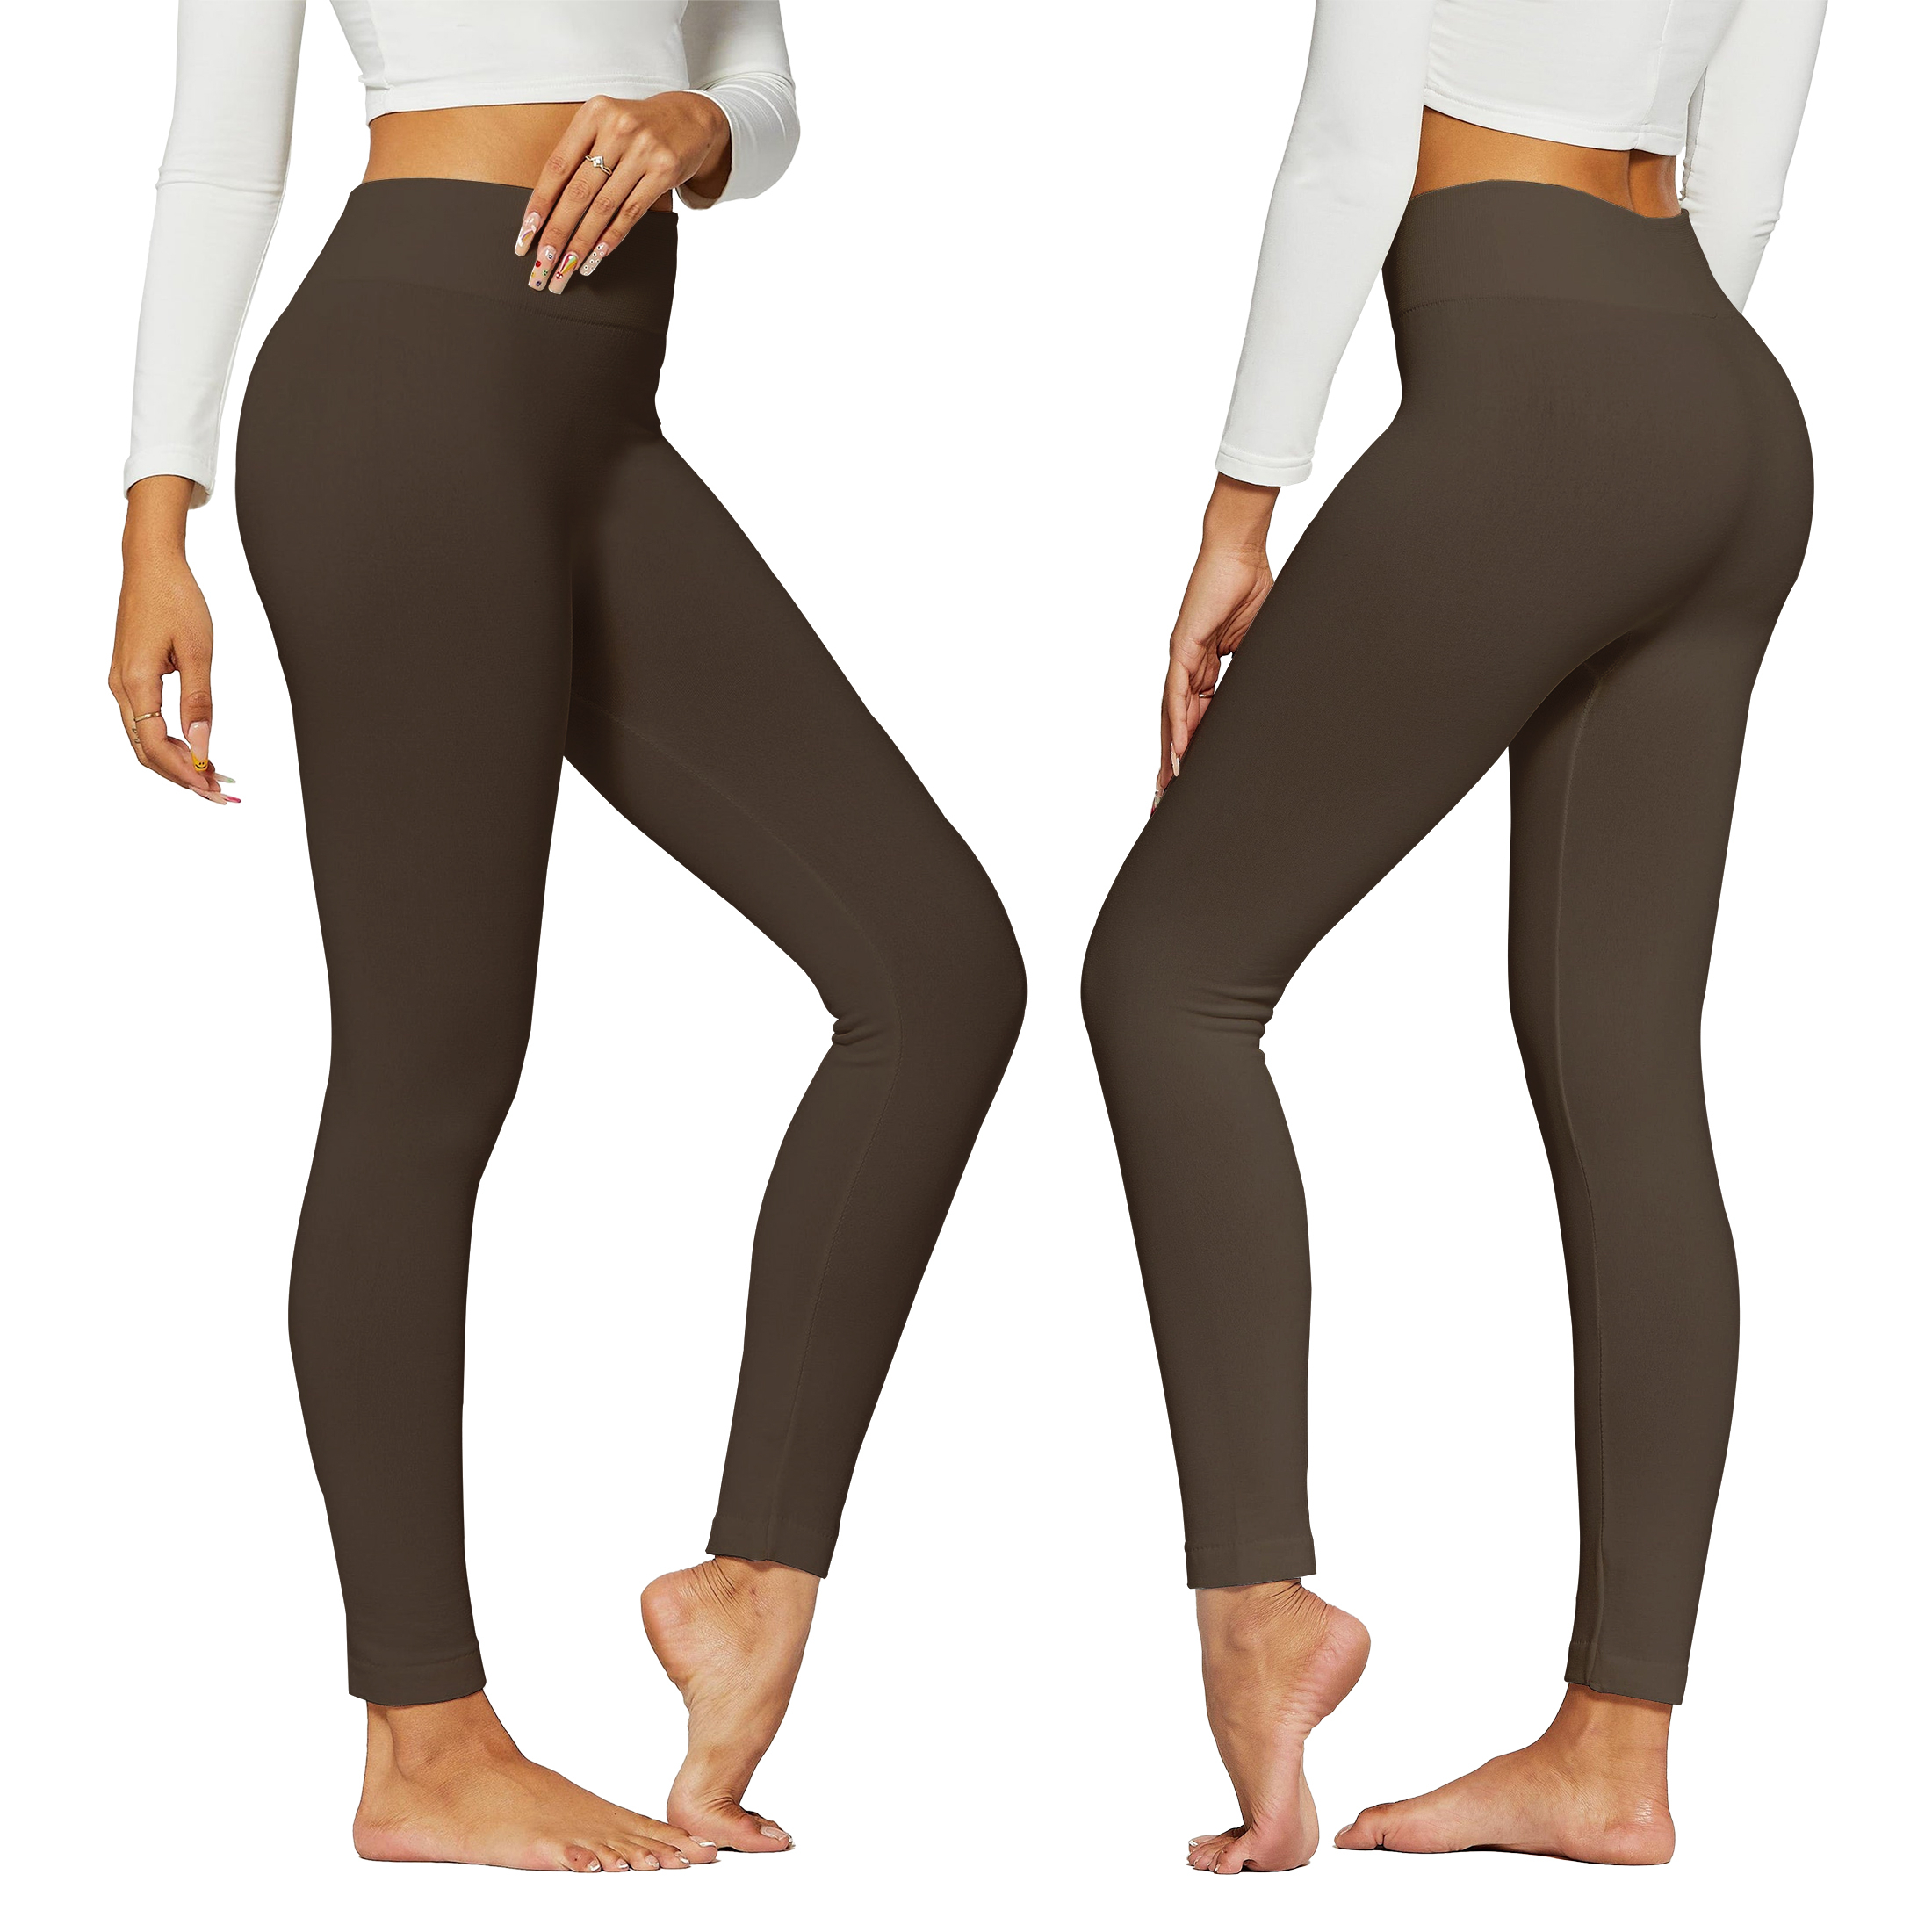 Women's Premium Quality High-Waist Fleece Lined Leggings (S-4X) - Brown, Small/Medium